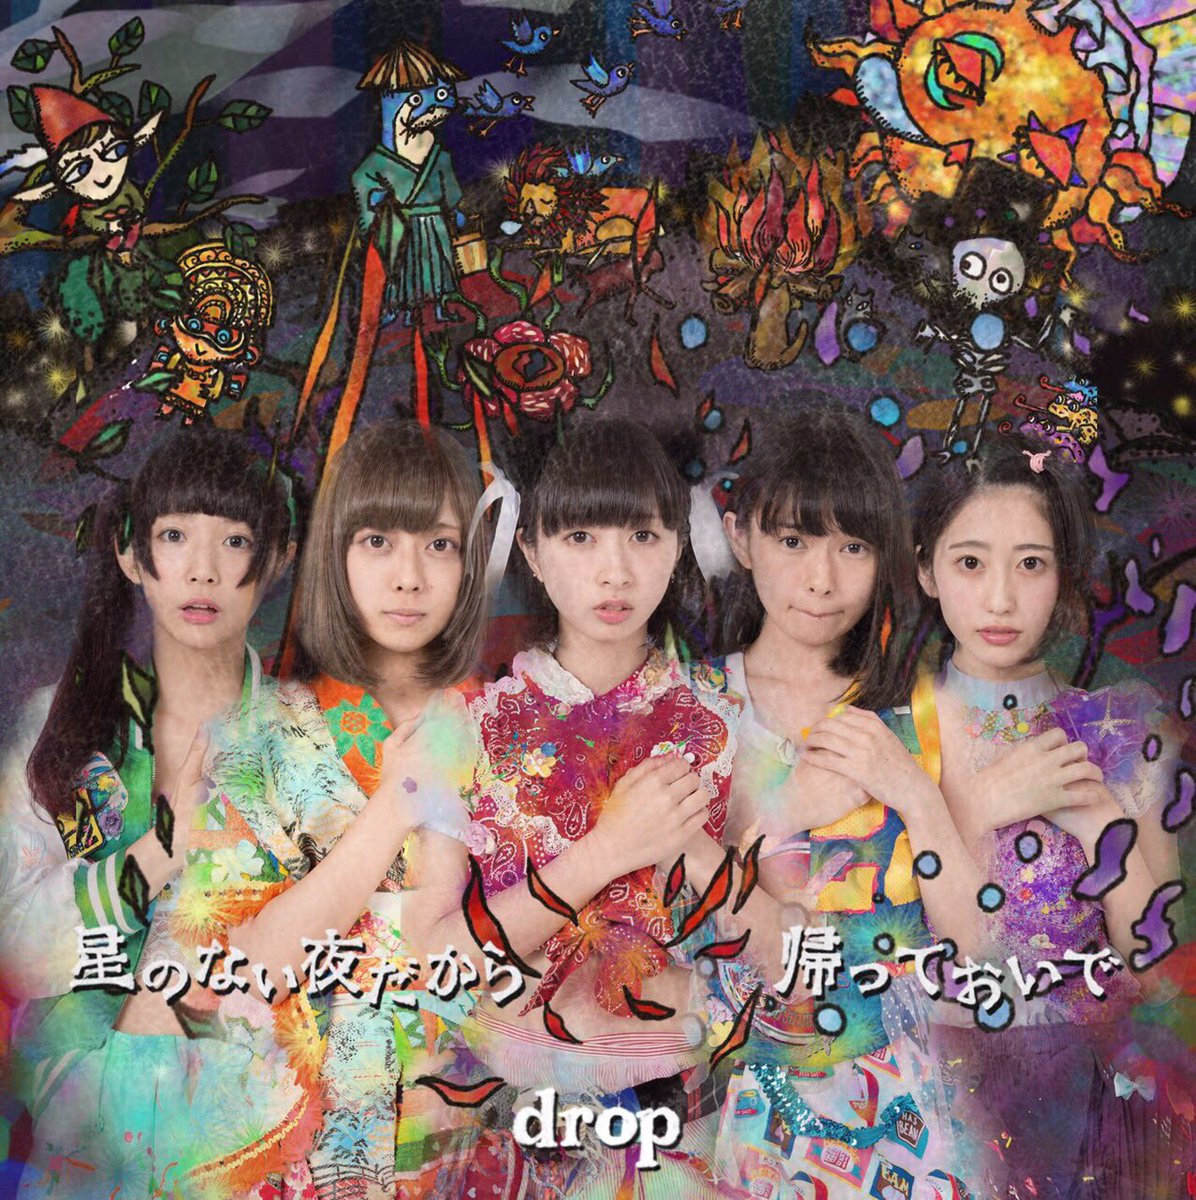 Starless Night With drop! drop’s 1st MV “Hoshi no Nai Yoru Dakara” revealed!